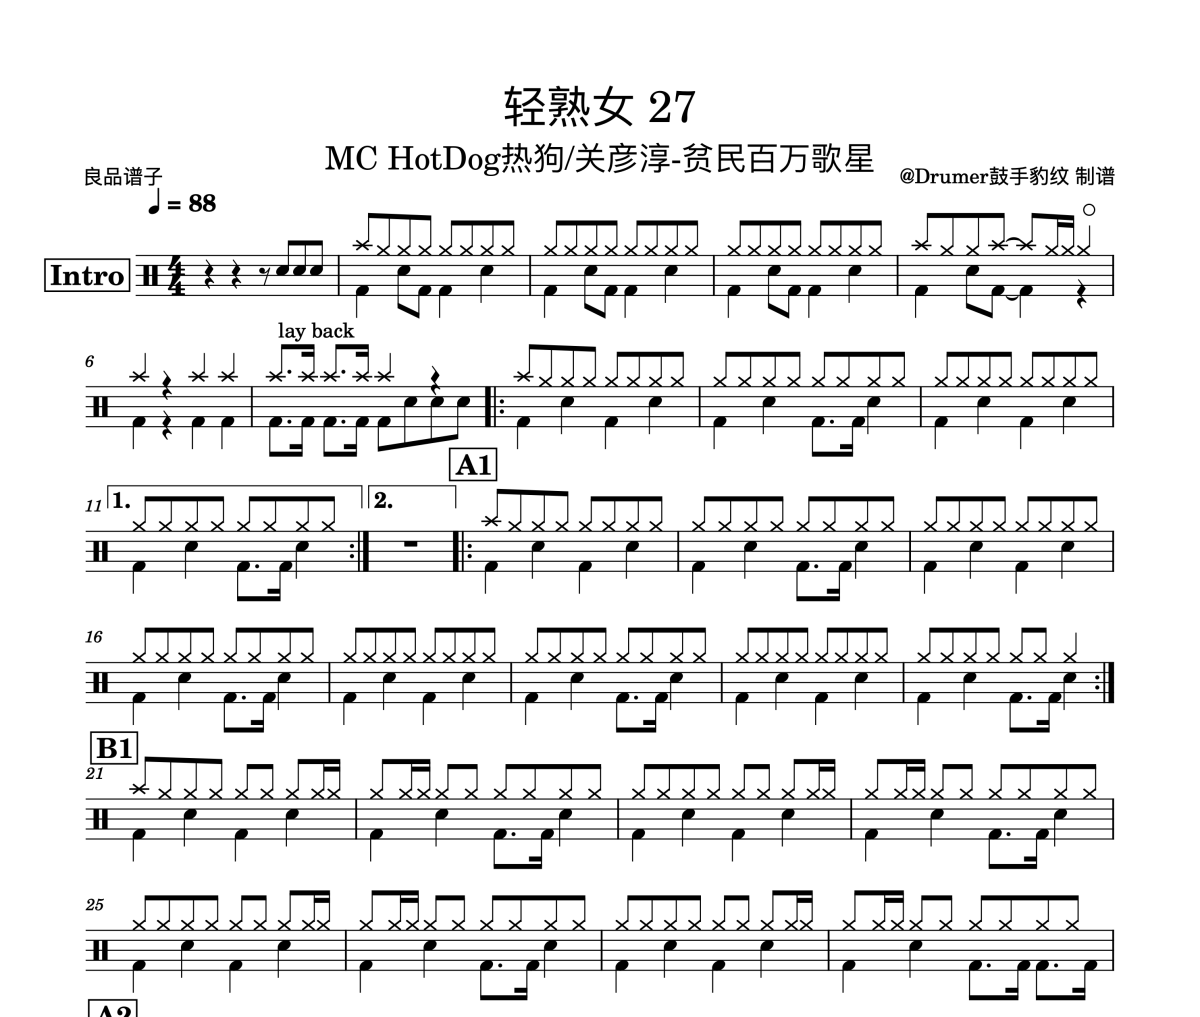 MC HotDog热狗-轻熟女 27架子鼓谱爵士鼓曲谱